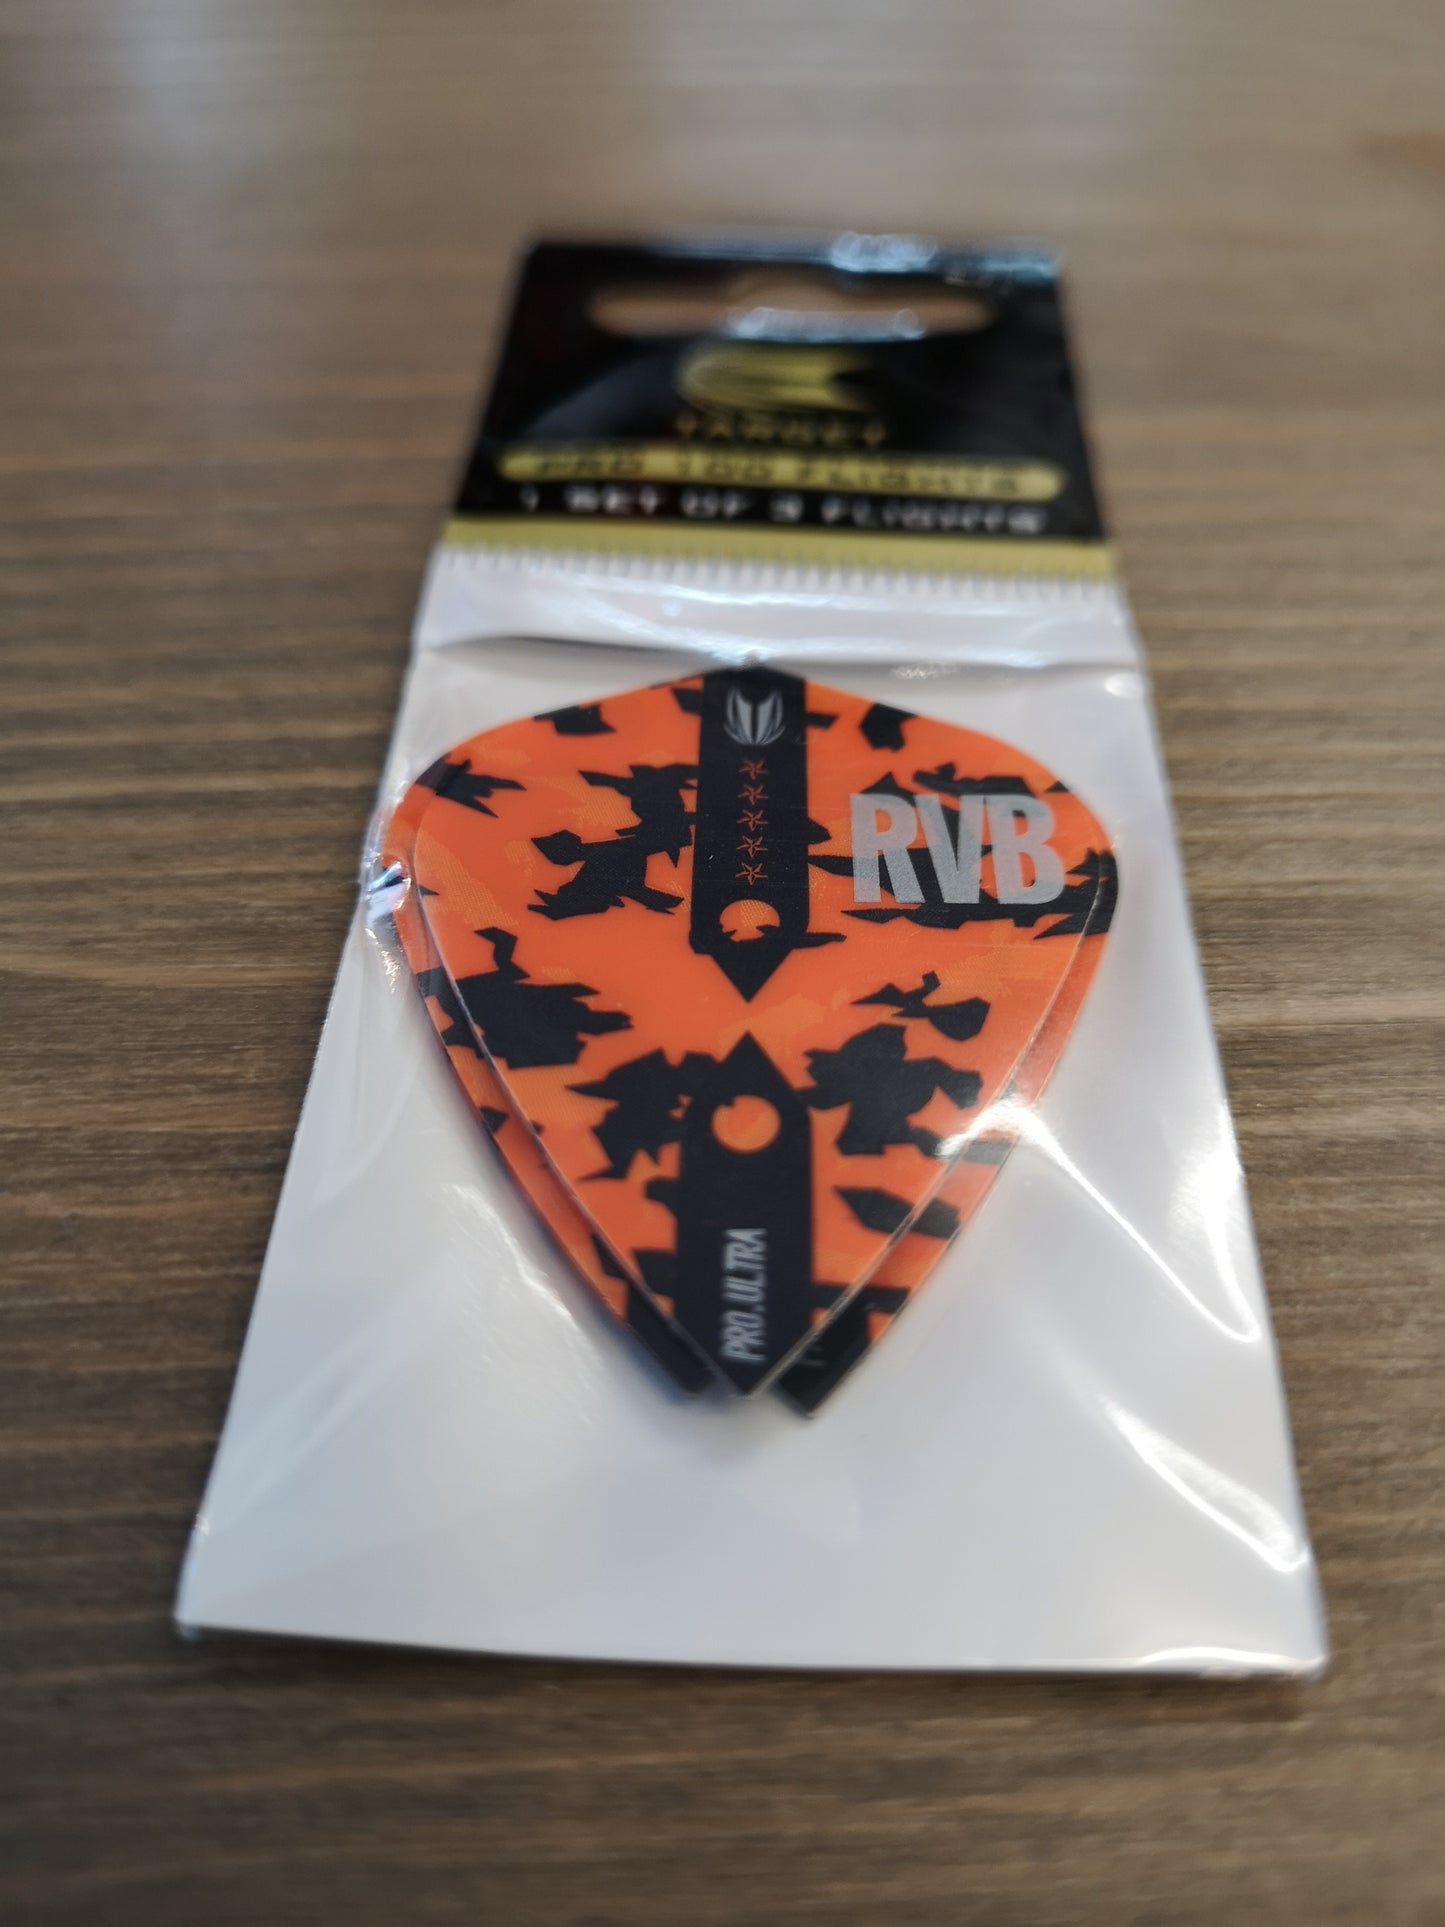 New Target RVB Kite orange Camo Darts Flights